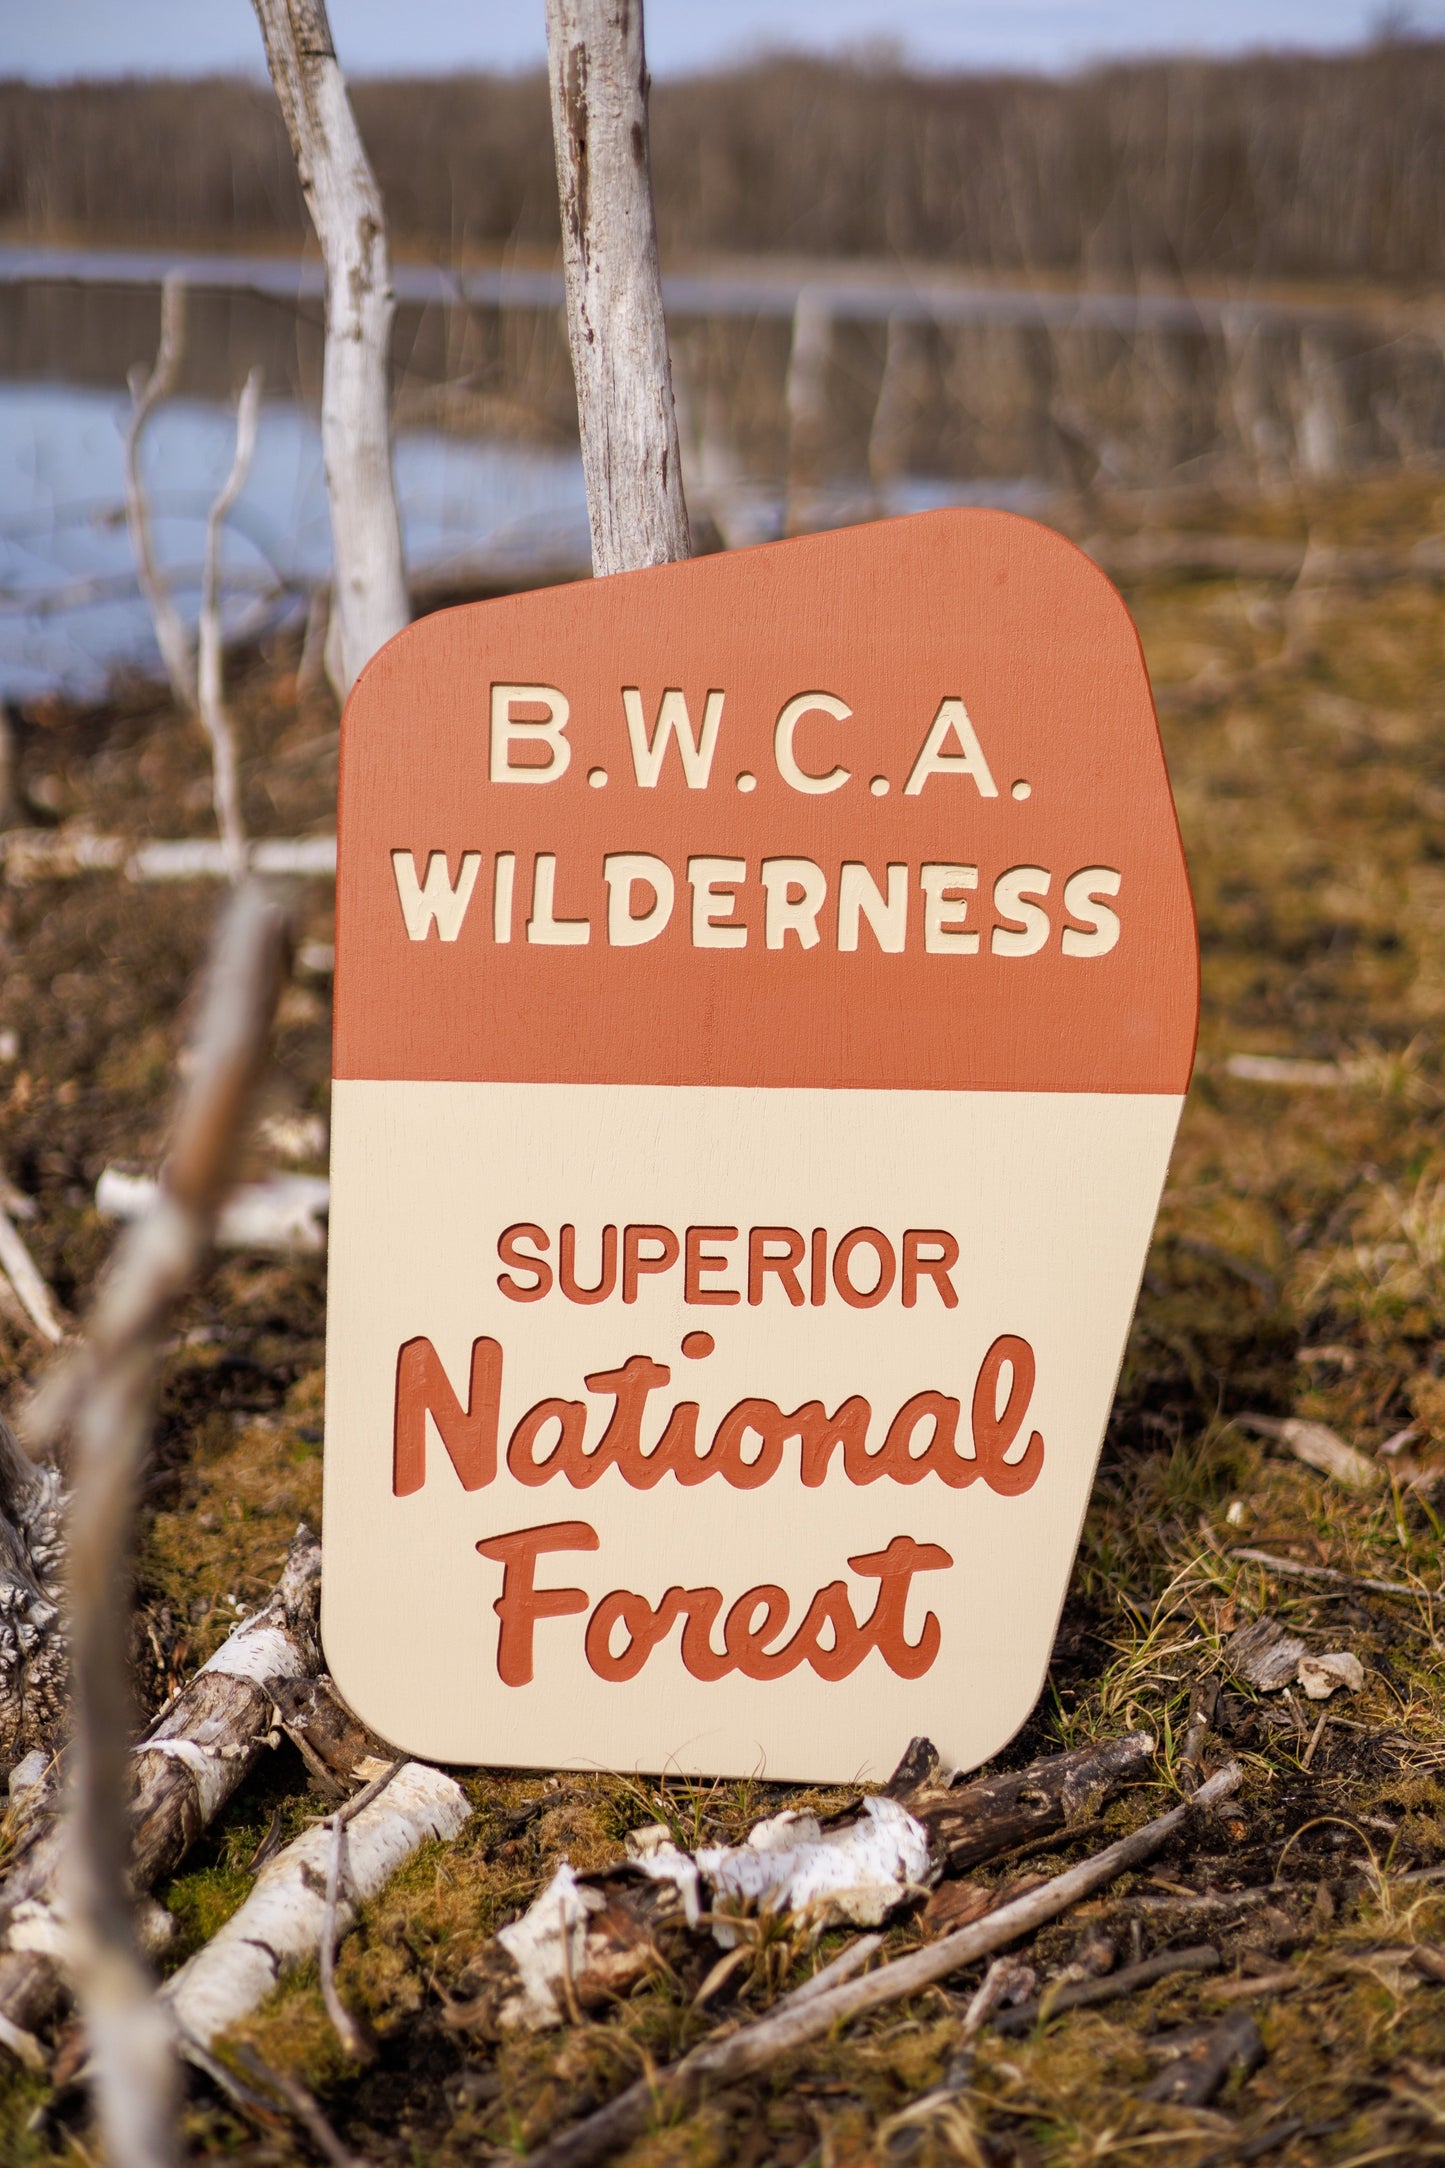 BWCA Wilderness - Superior National Forest Replica Sign